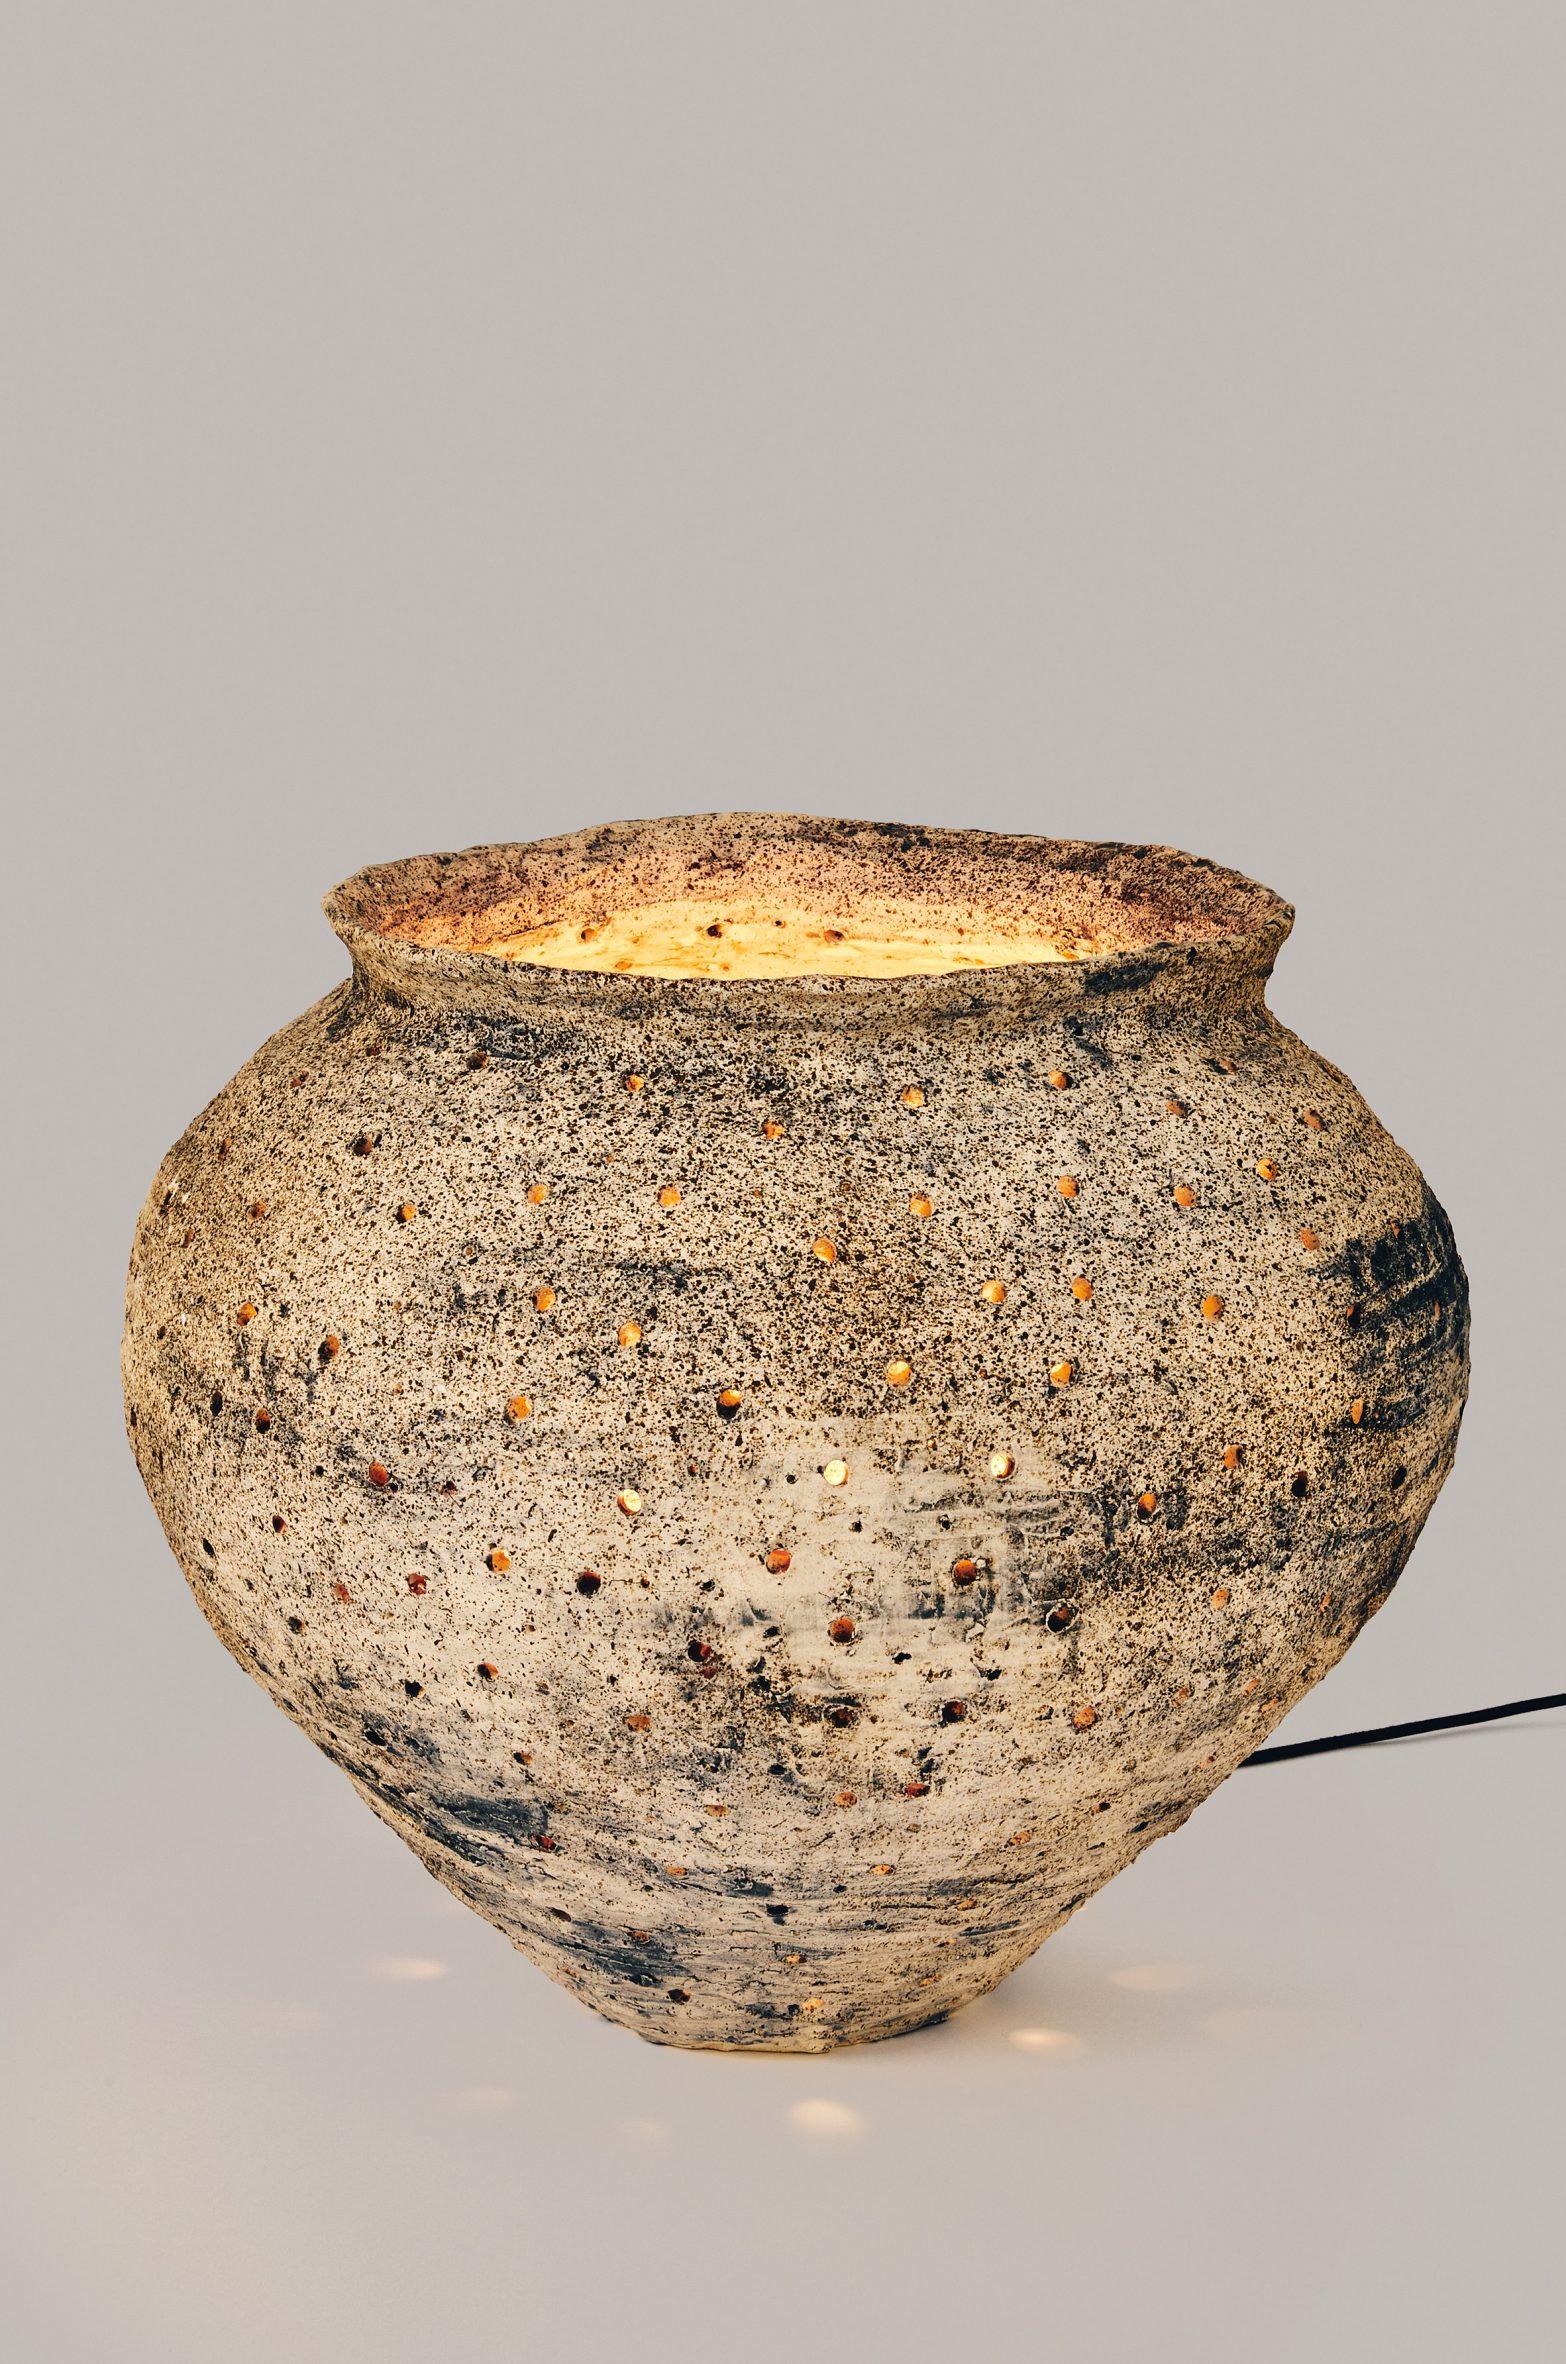 Illuminated clay pot at Loewe Lamps